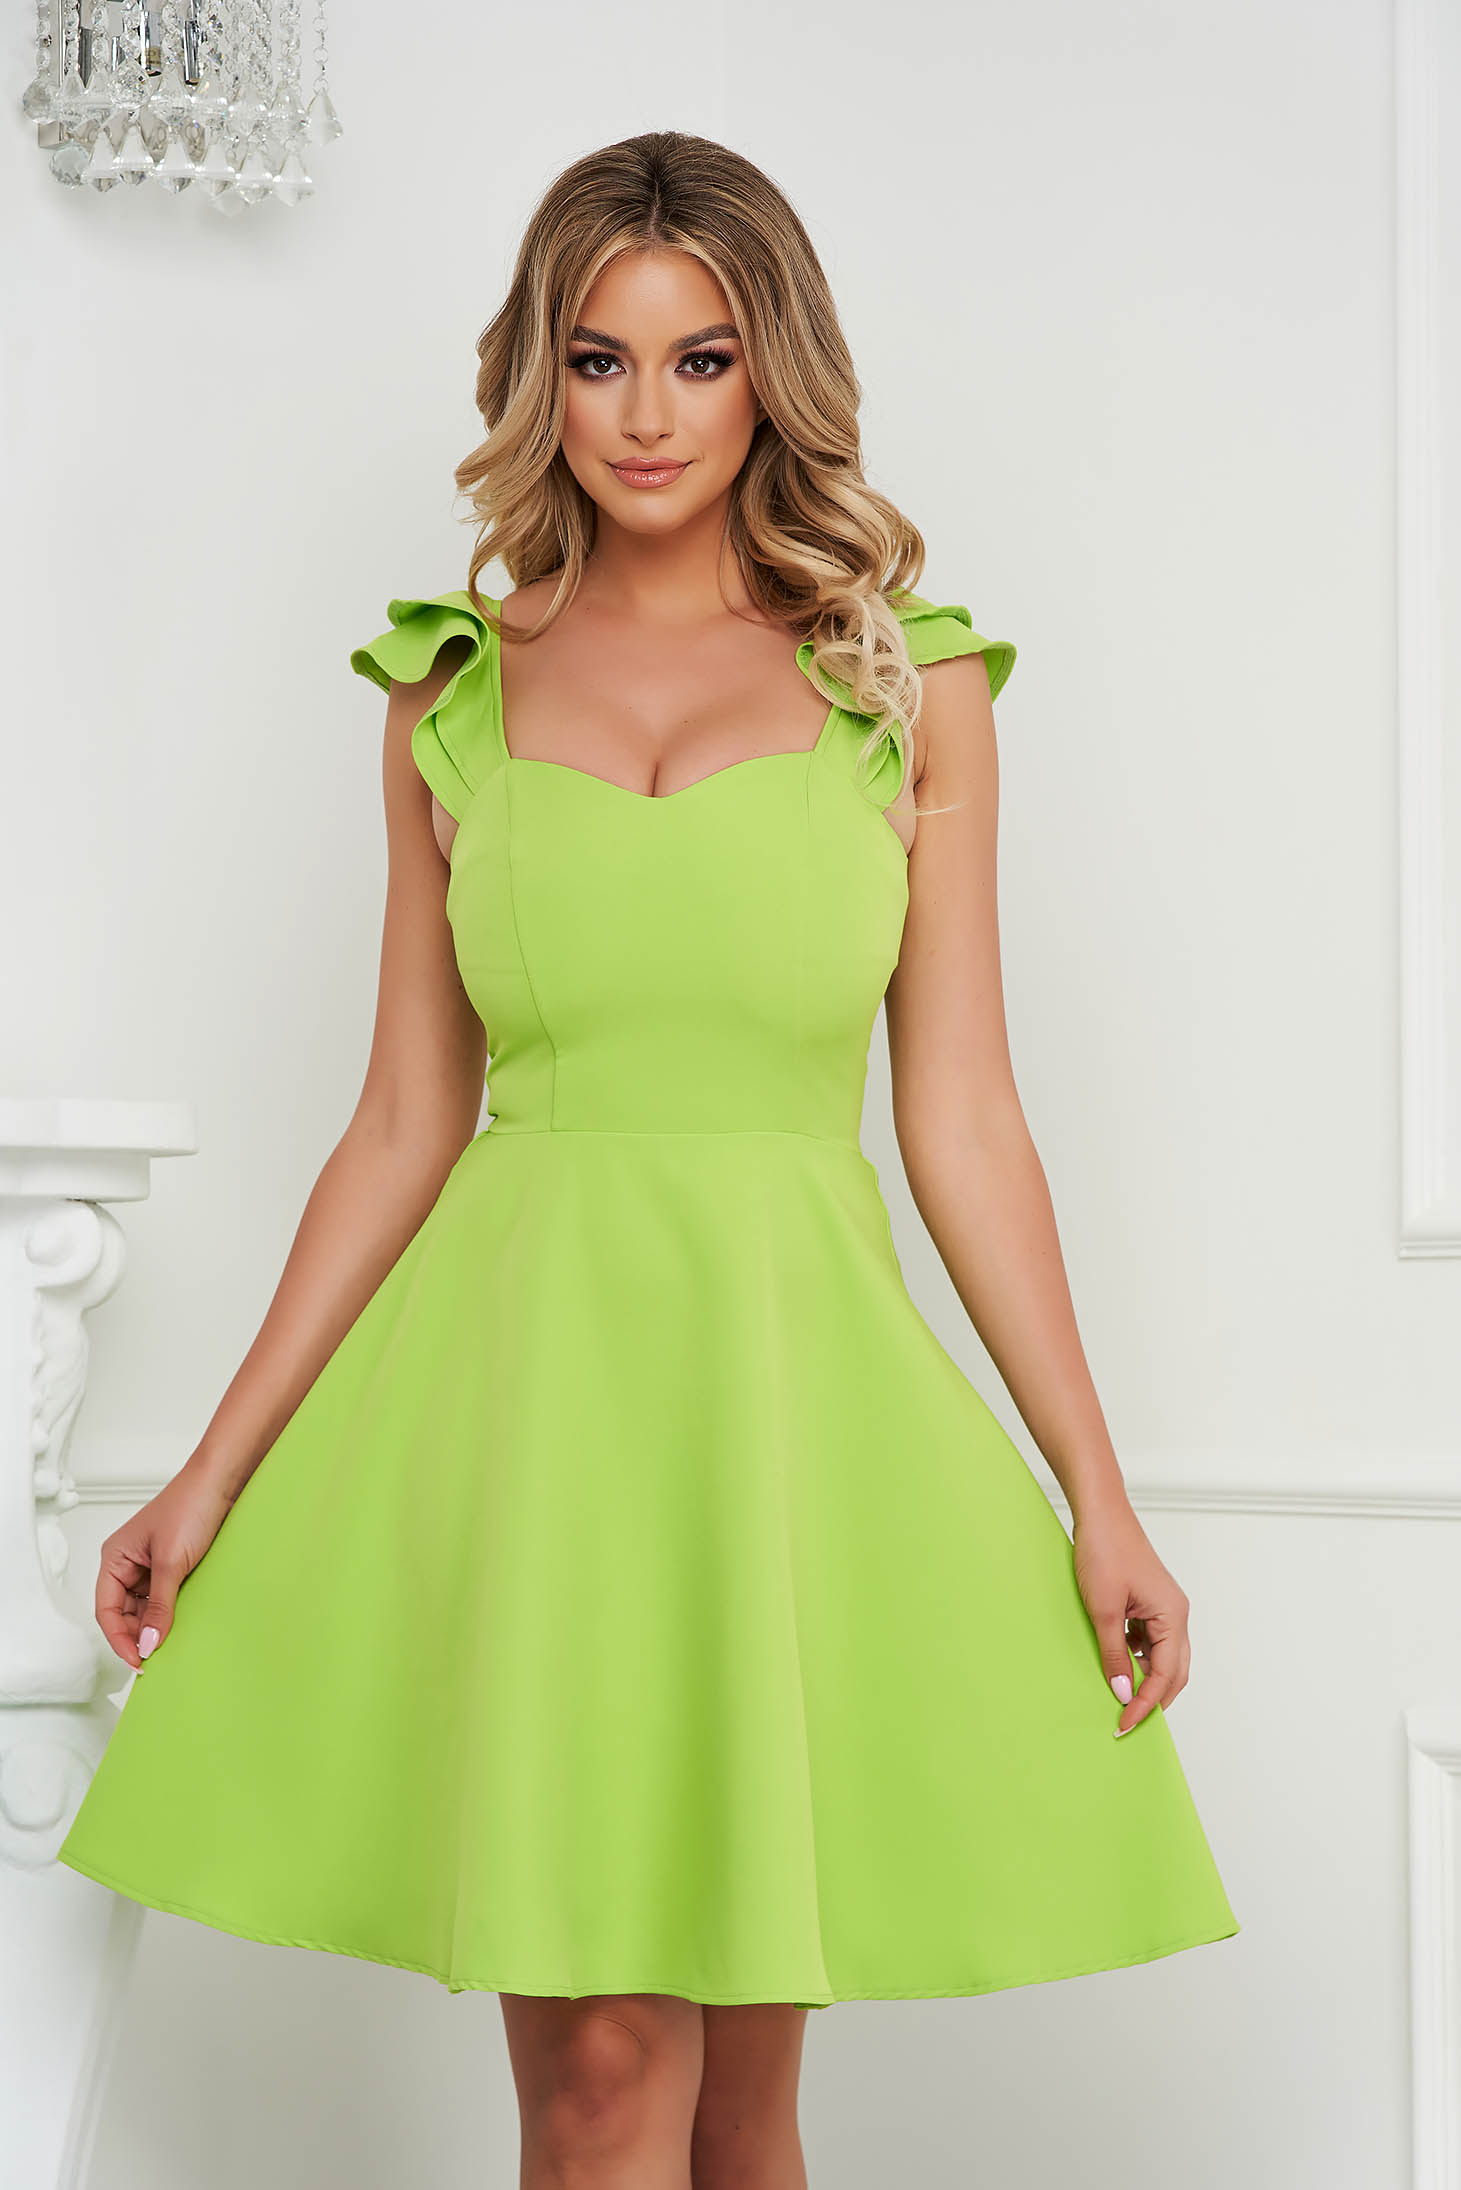 Dress StarShinerS green elegant short cut cloth with ruffle details thin fabric